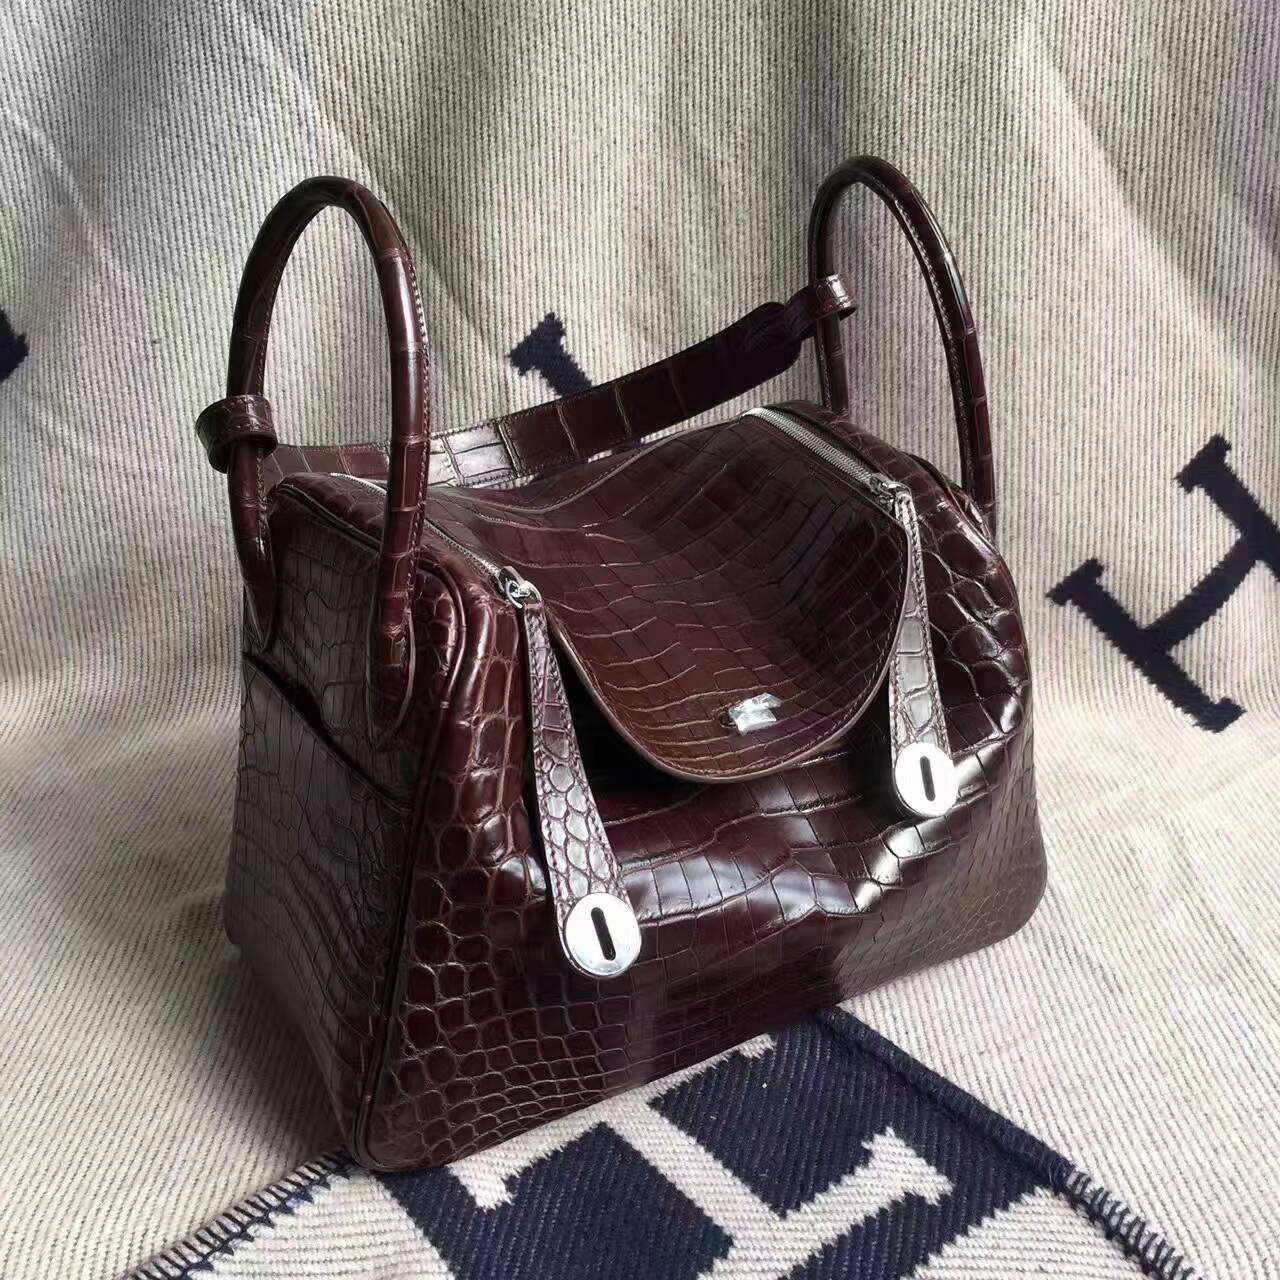 Wholesale Hermes Crocodile Matt Leather Lindy Bag 30cm in Chocolate Color